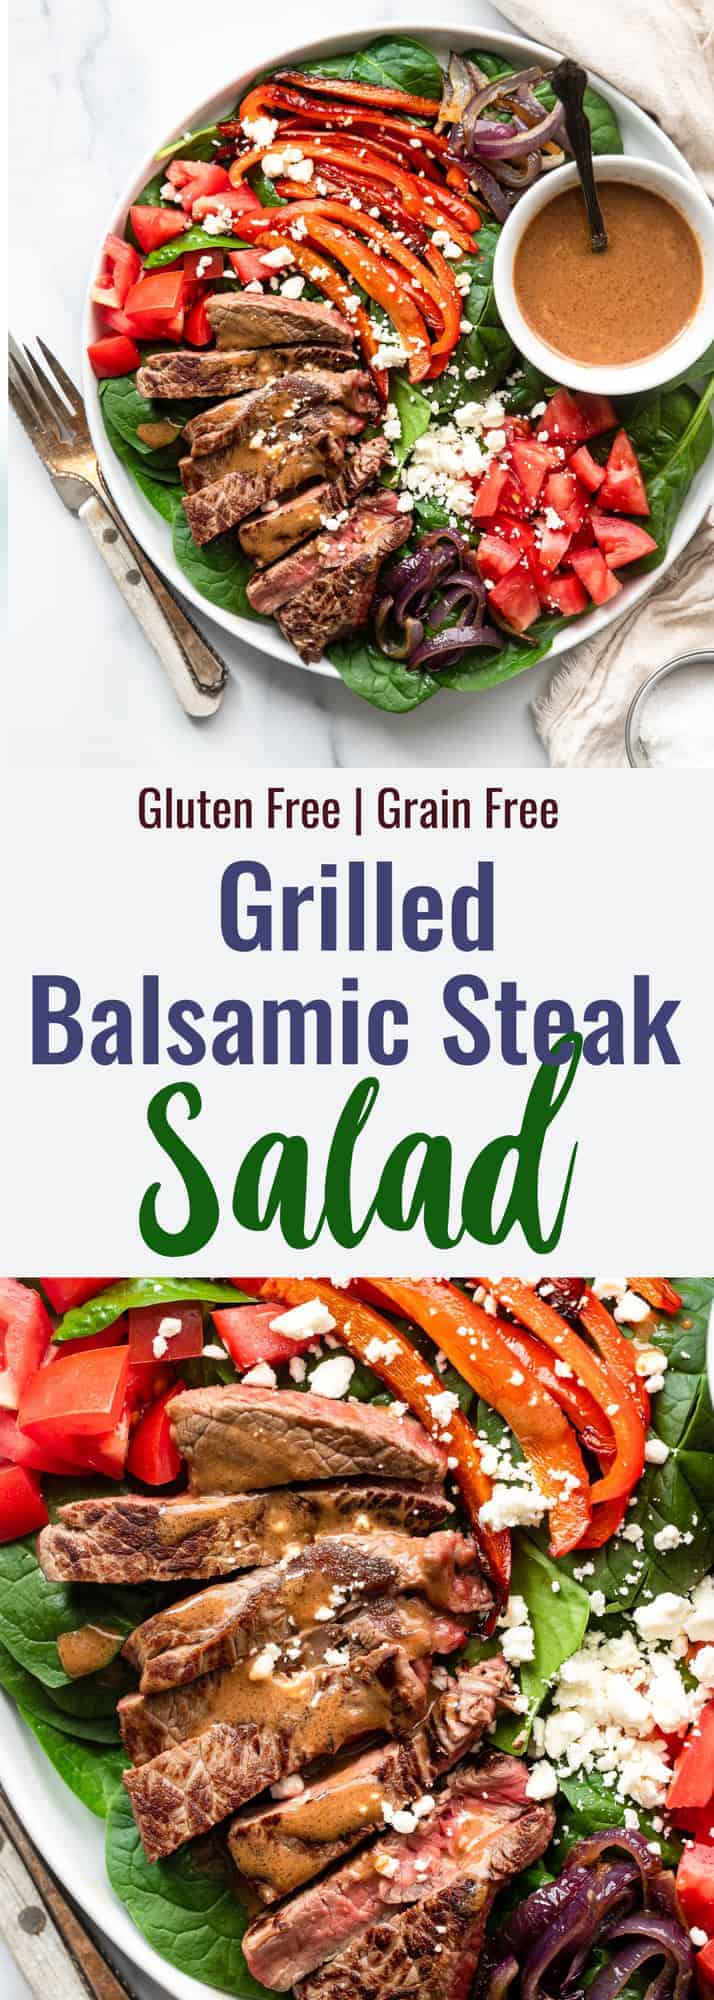 Balsamic Steak Salada Collage photo